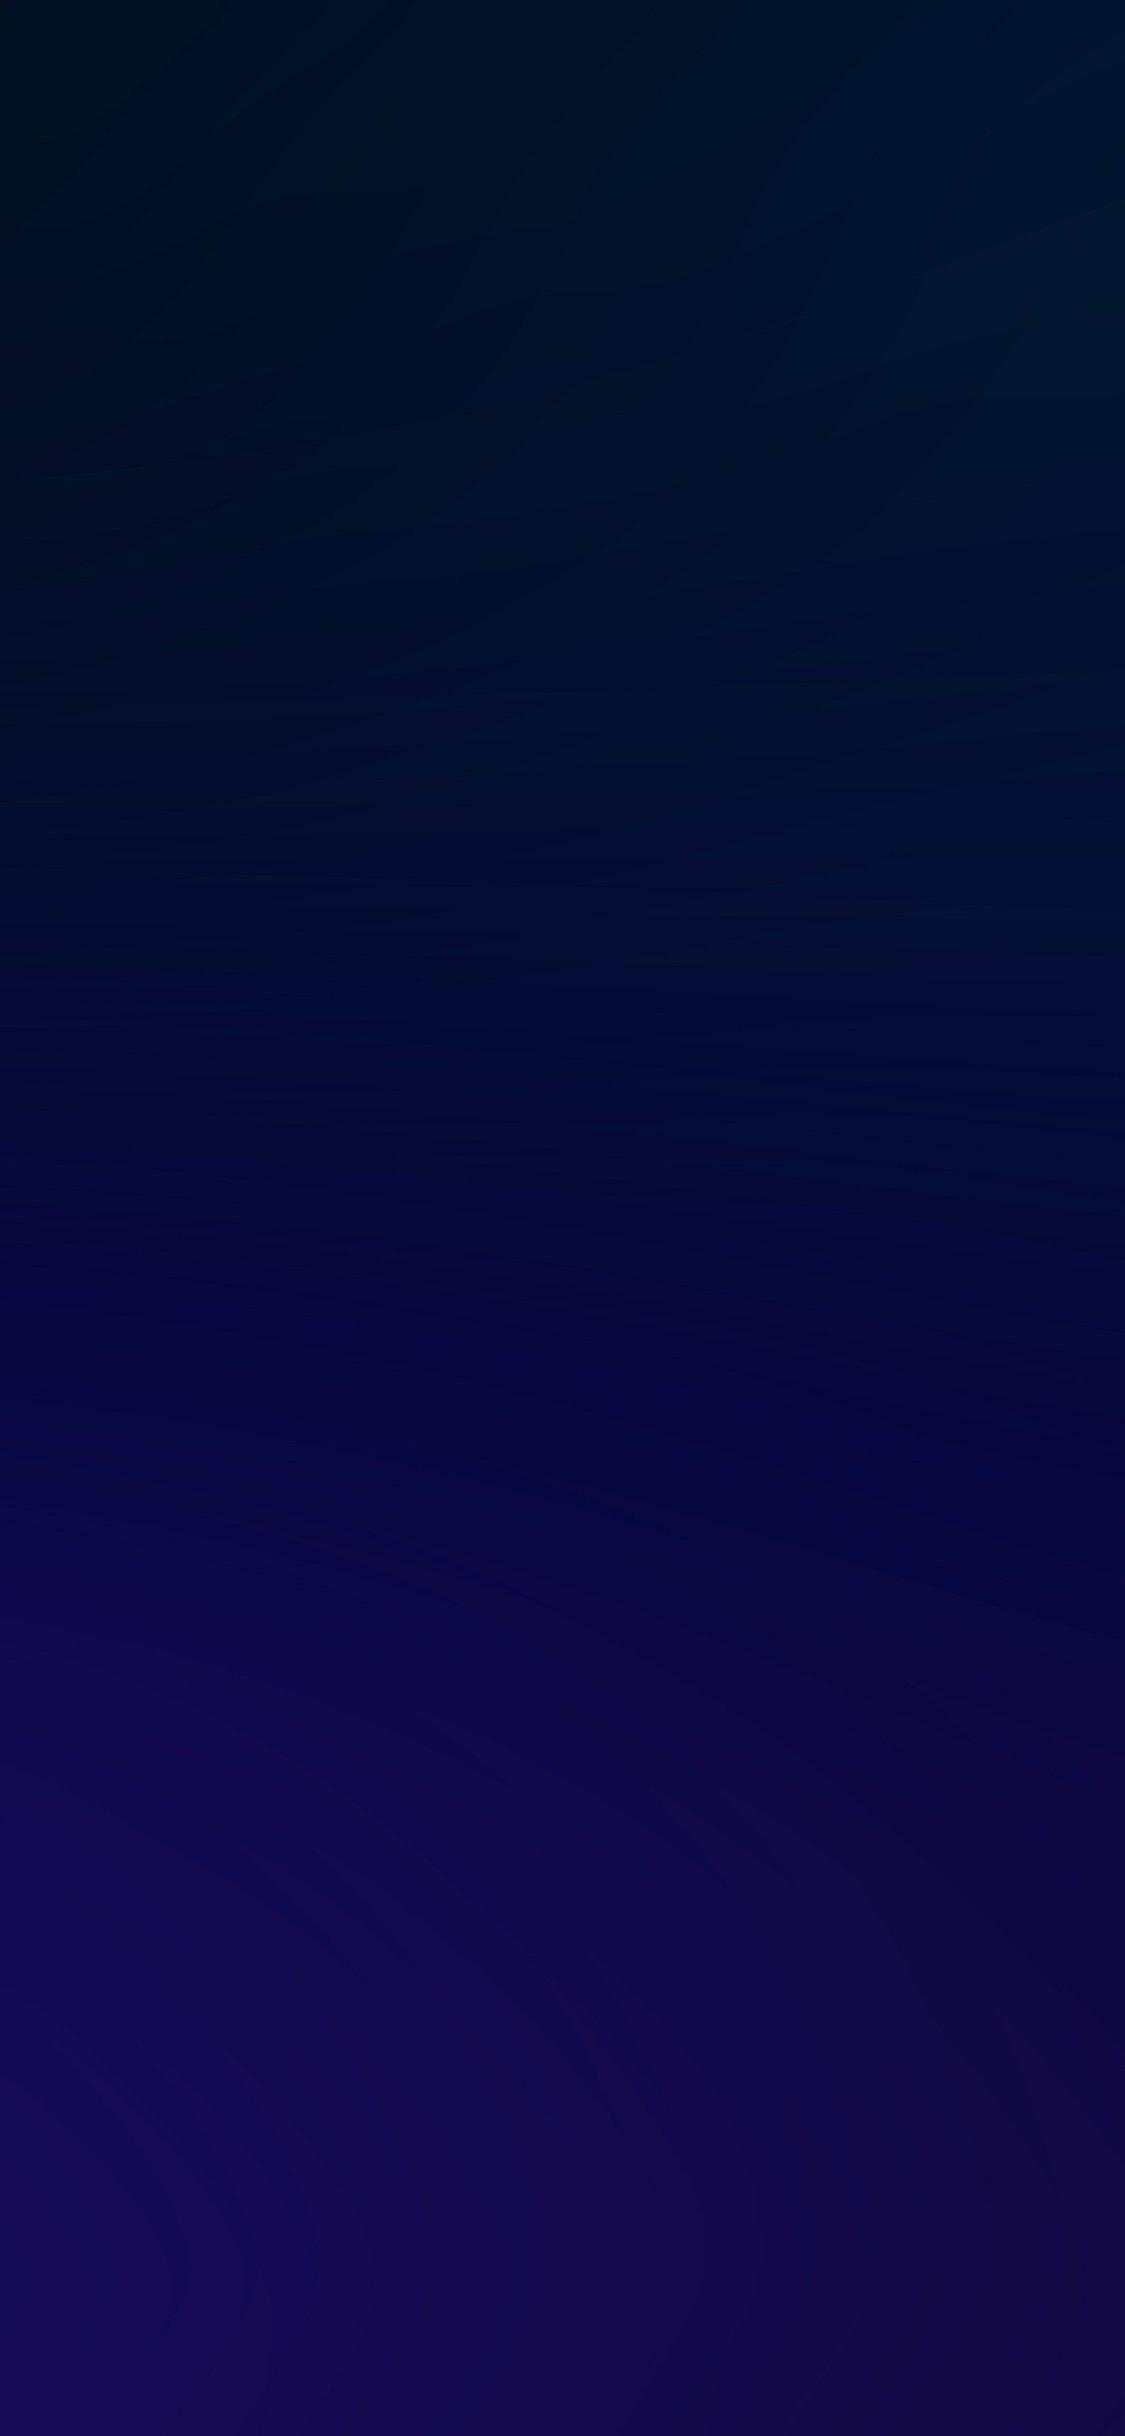 iPhone X wallpaper. dark blue blur gradation